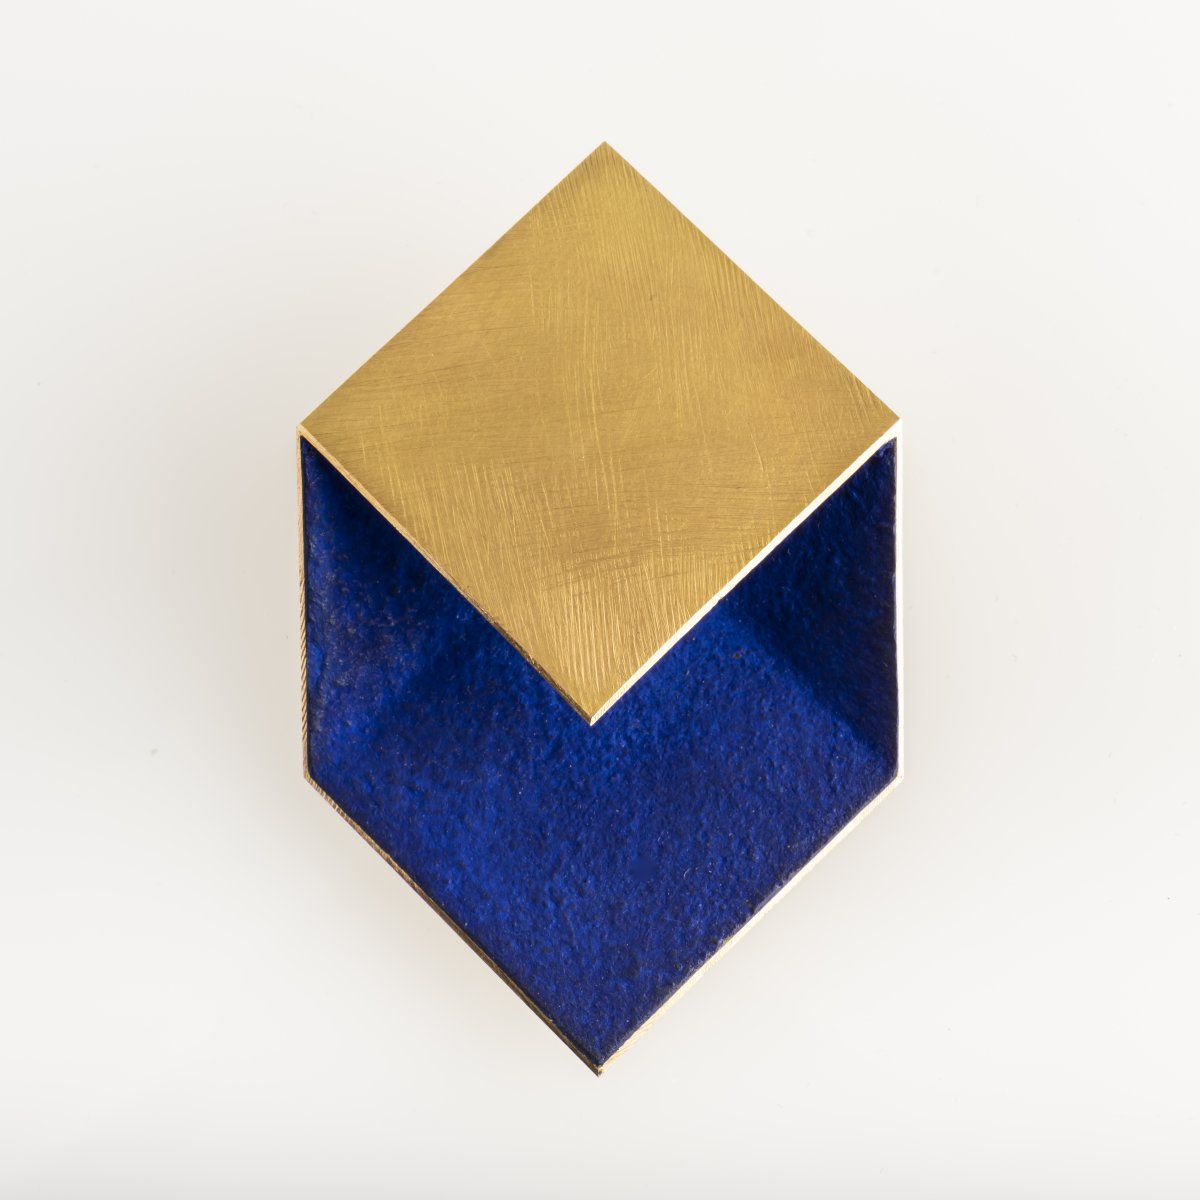 Null Giampaolo Babetto (1947年帕多瓦-居住在Arquà Petrarca)，胸针，1993年，18ct.黄金，蓝色颜料。34克。

&hellip;